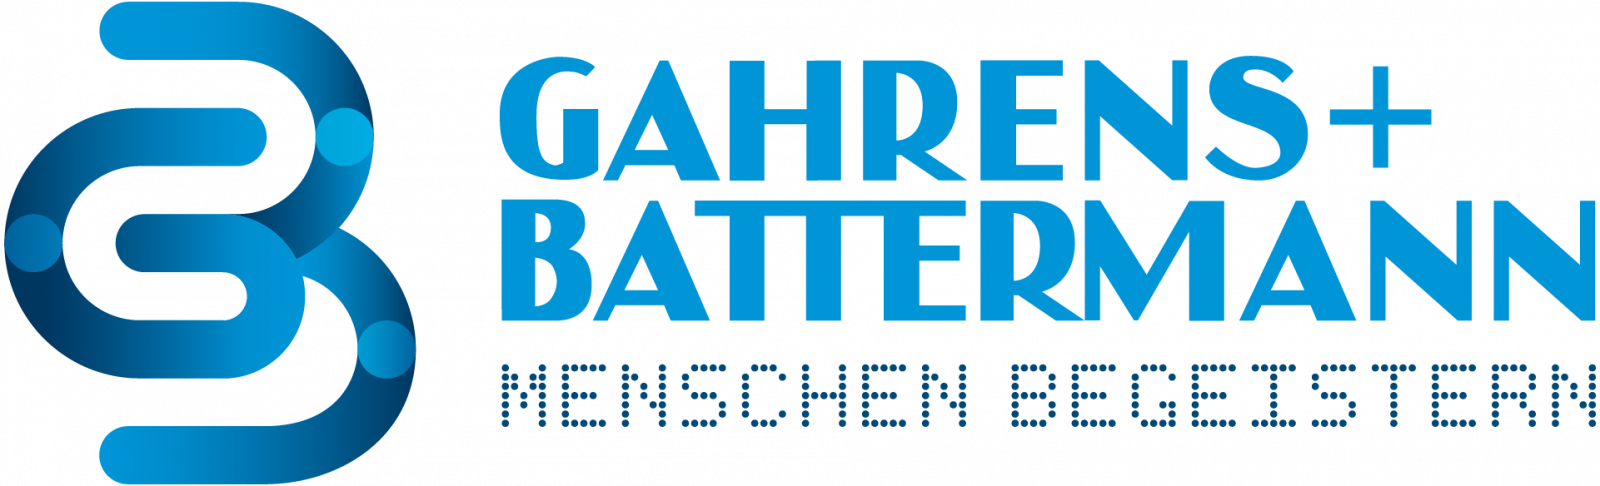 Gahrens Batterman Logo